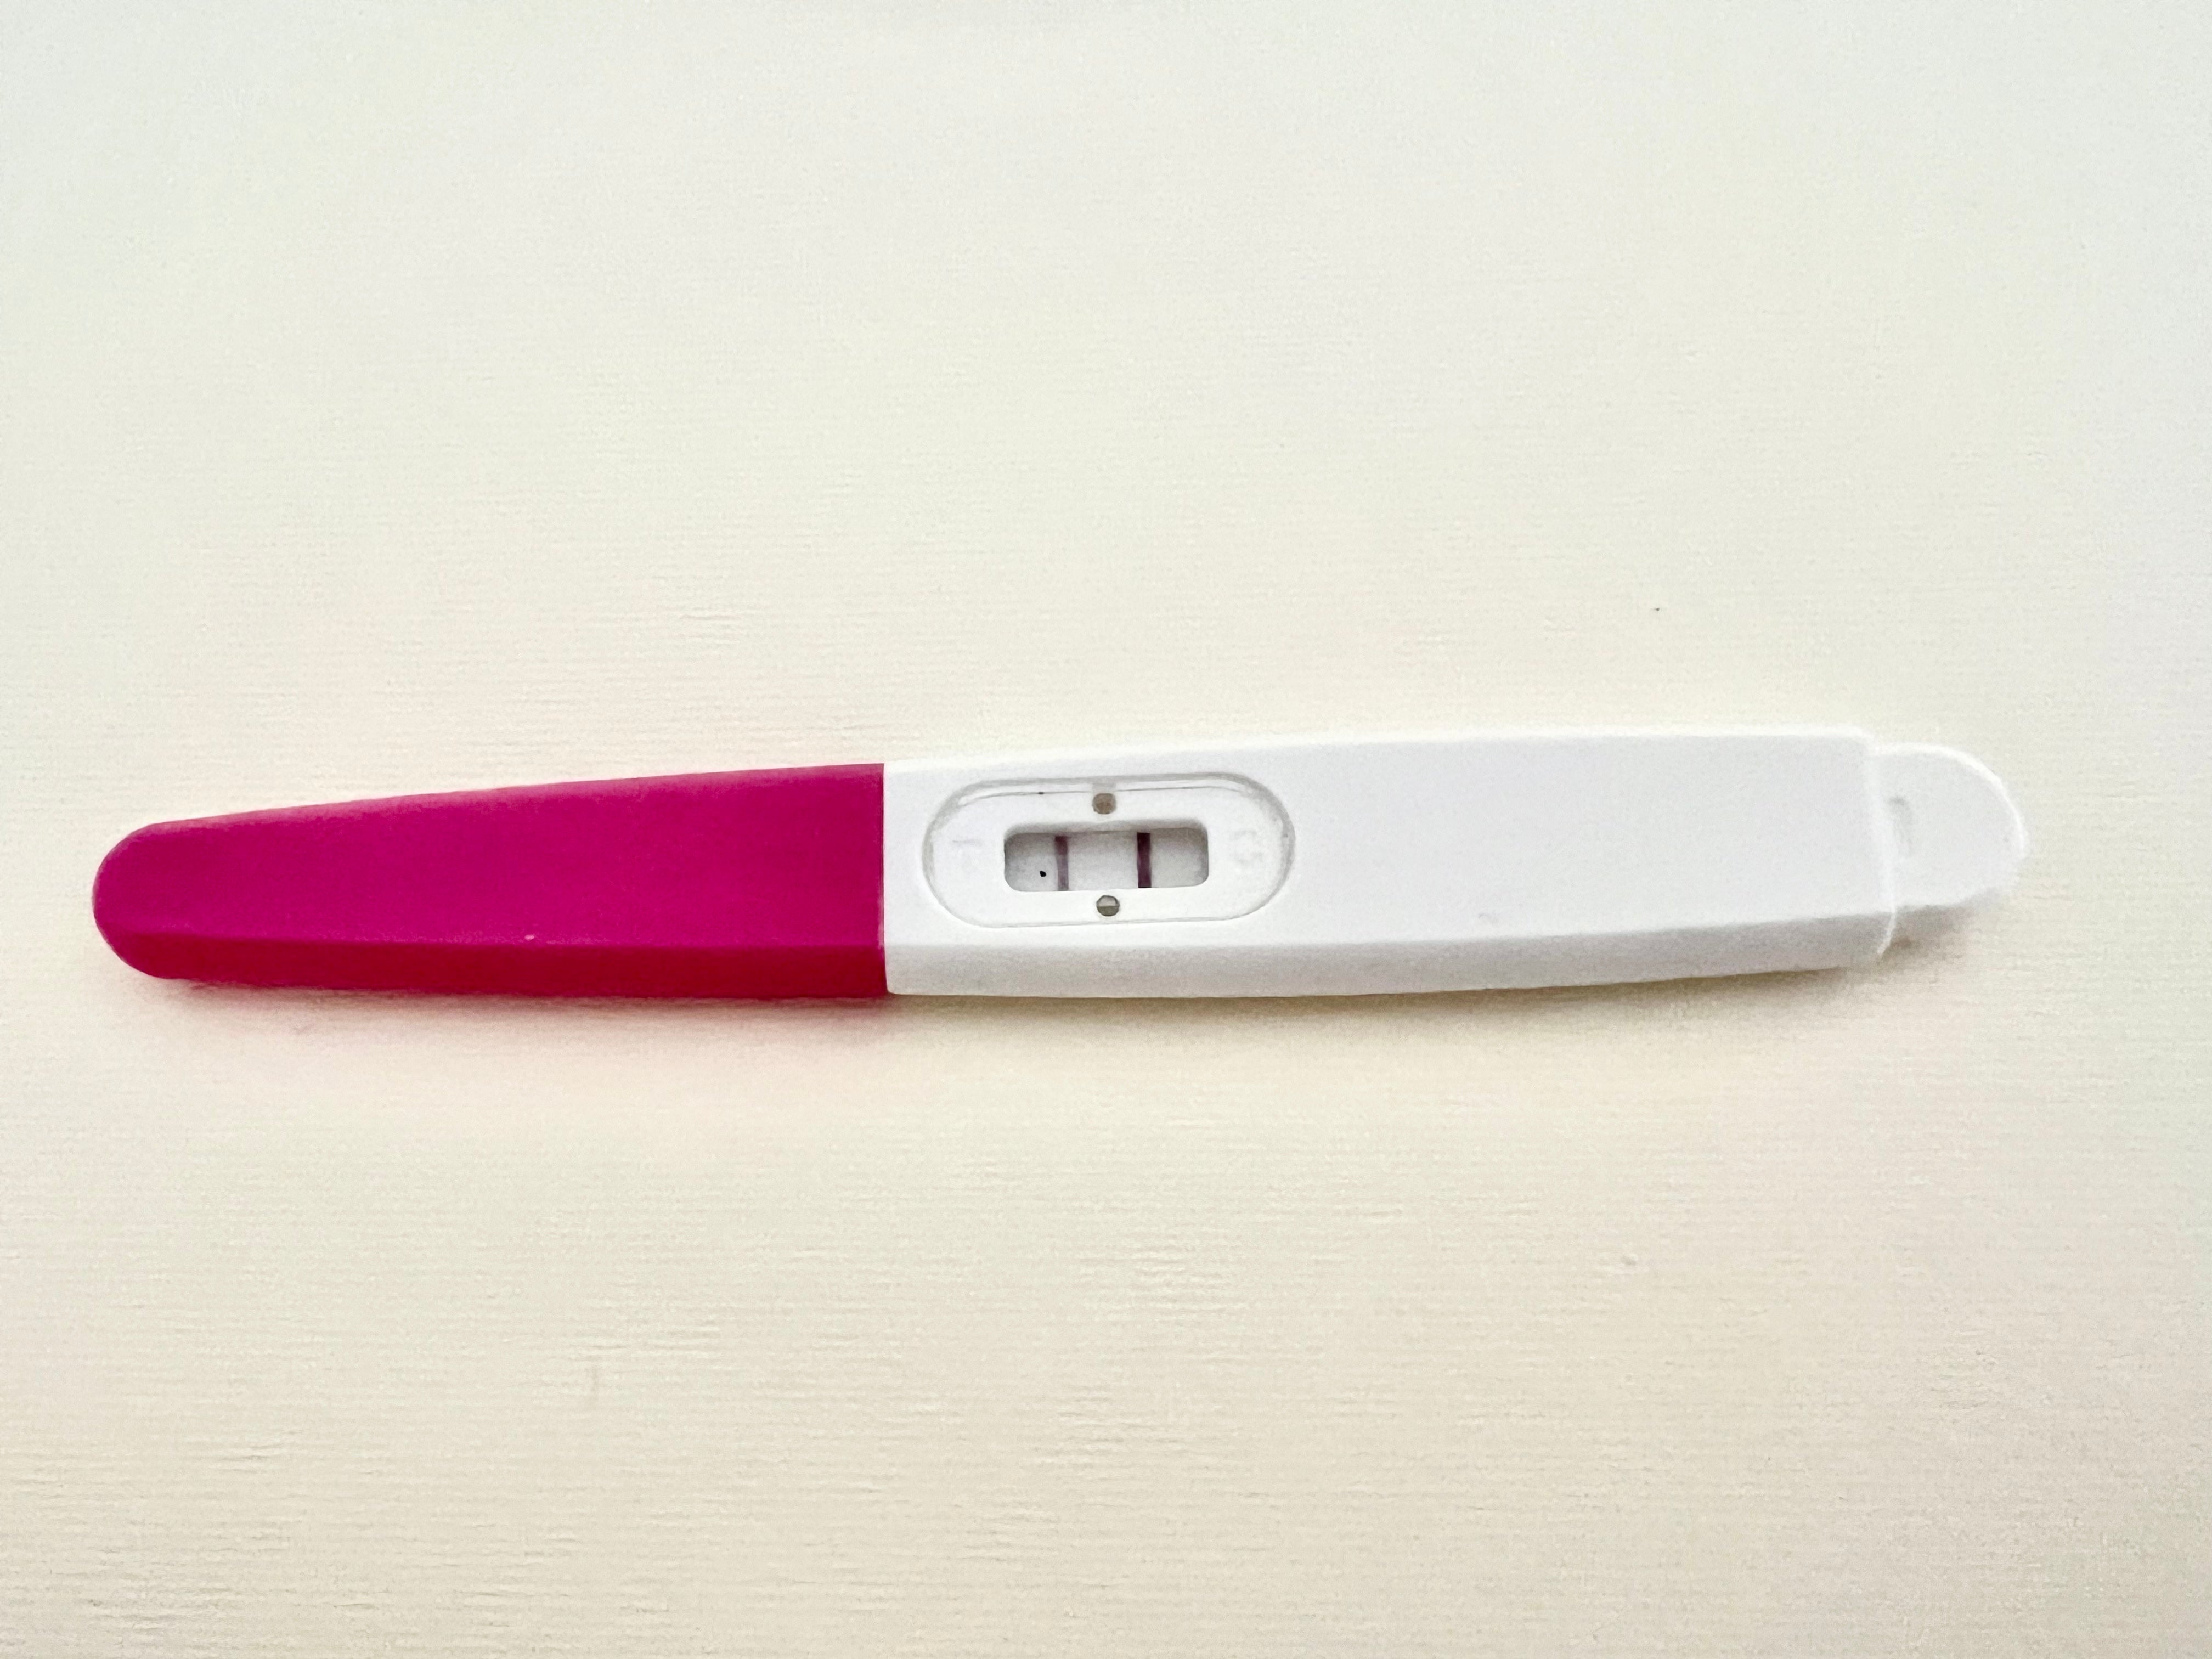 Positiv Gravidtid Tidlig graviditetstest stav